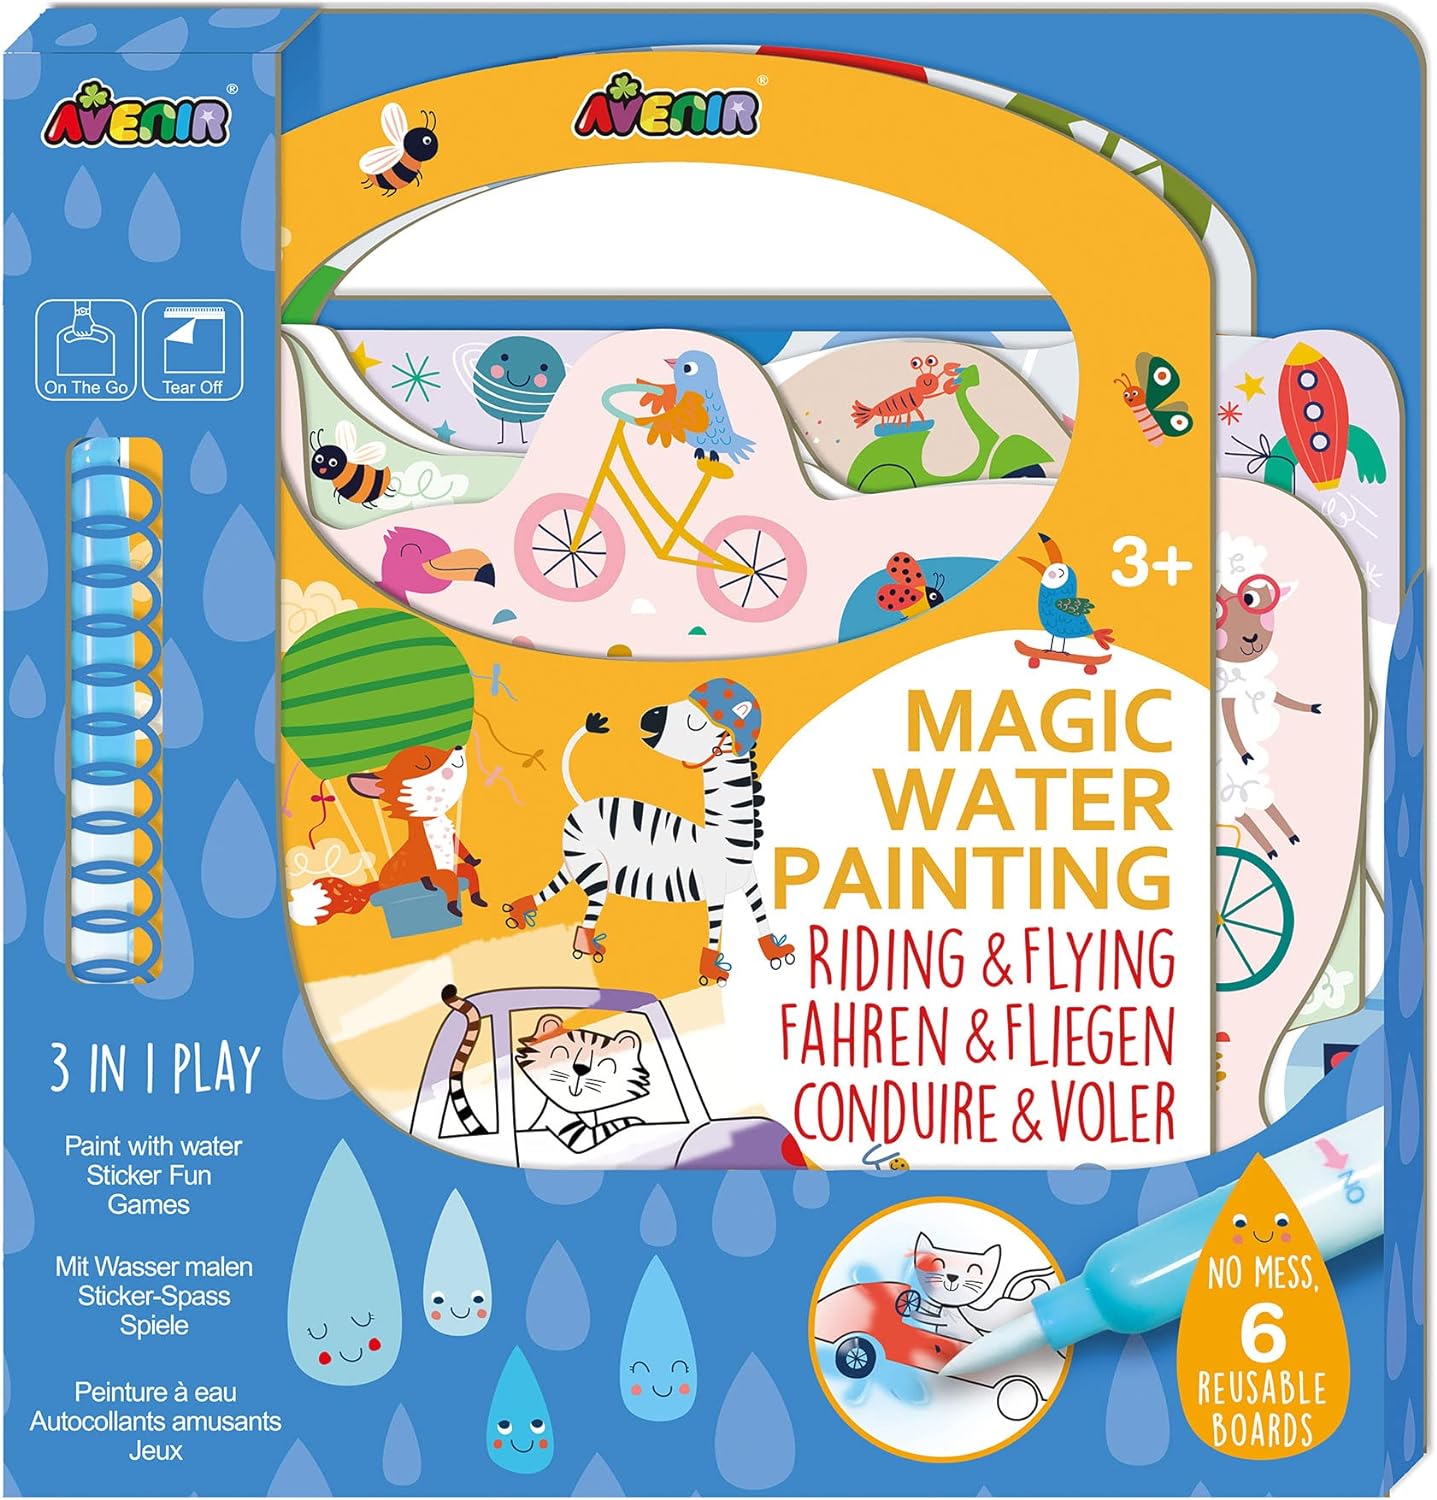 Avenir Magic Water Painting-Riding & Flying